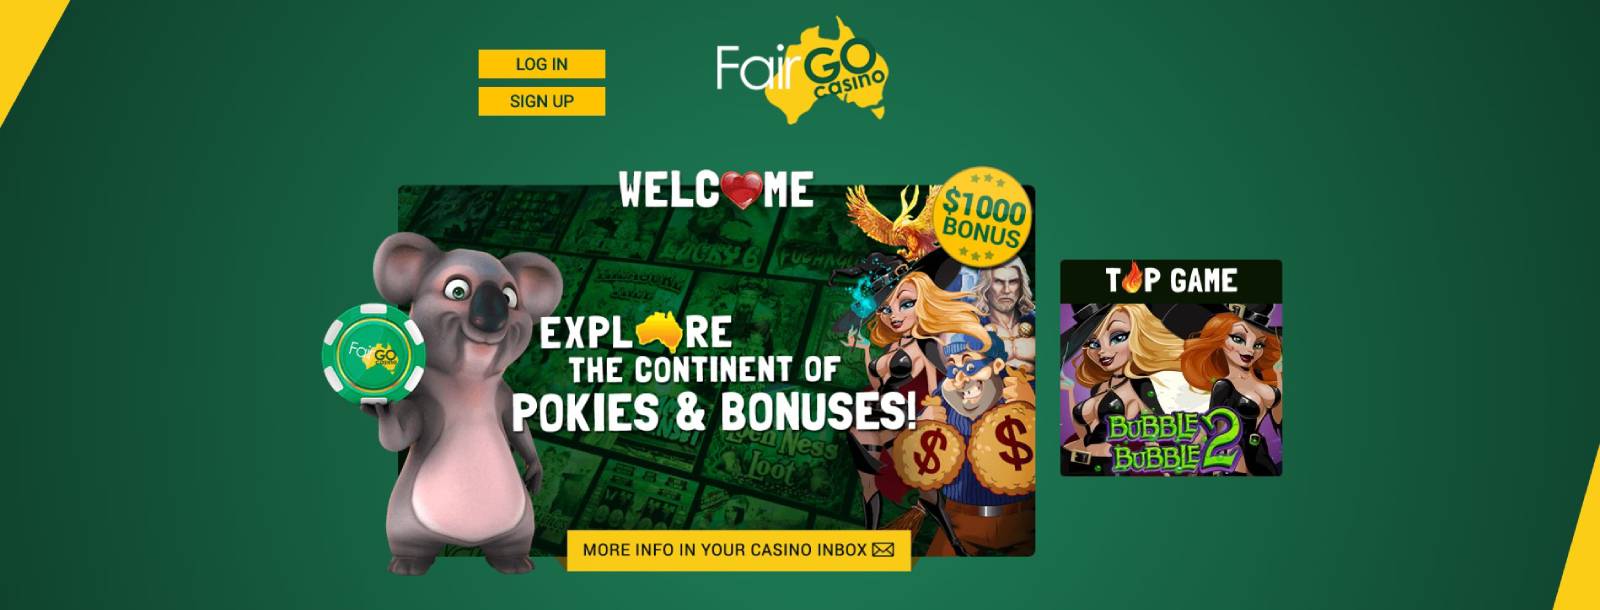 Fair Go casino homepage